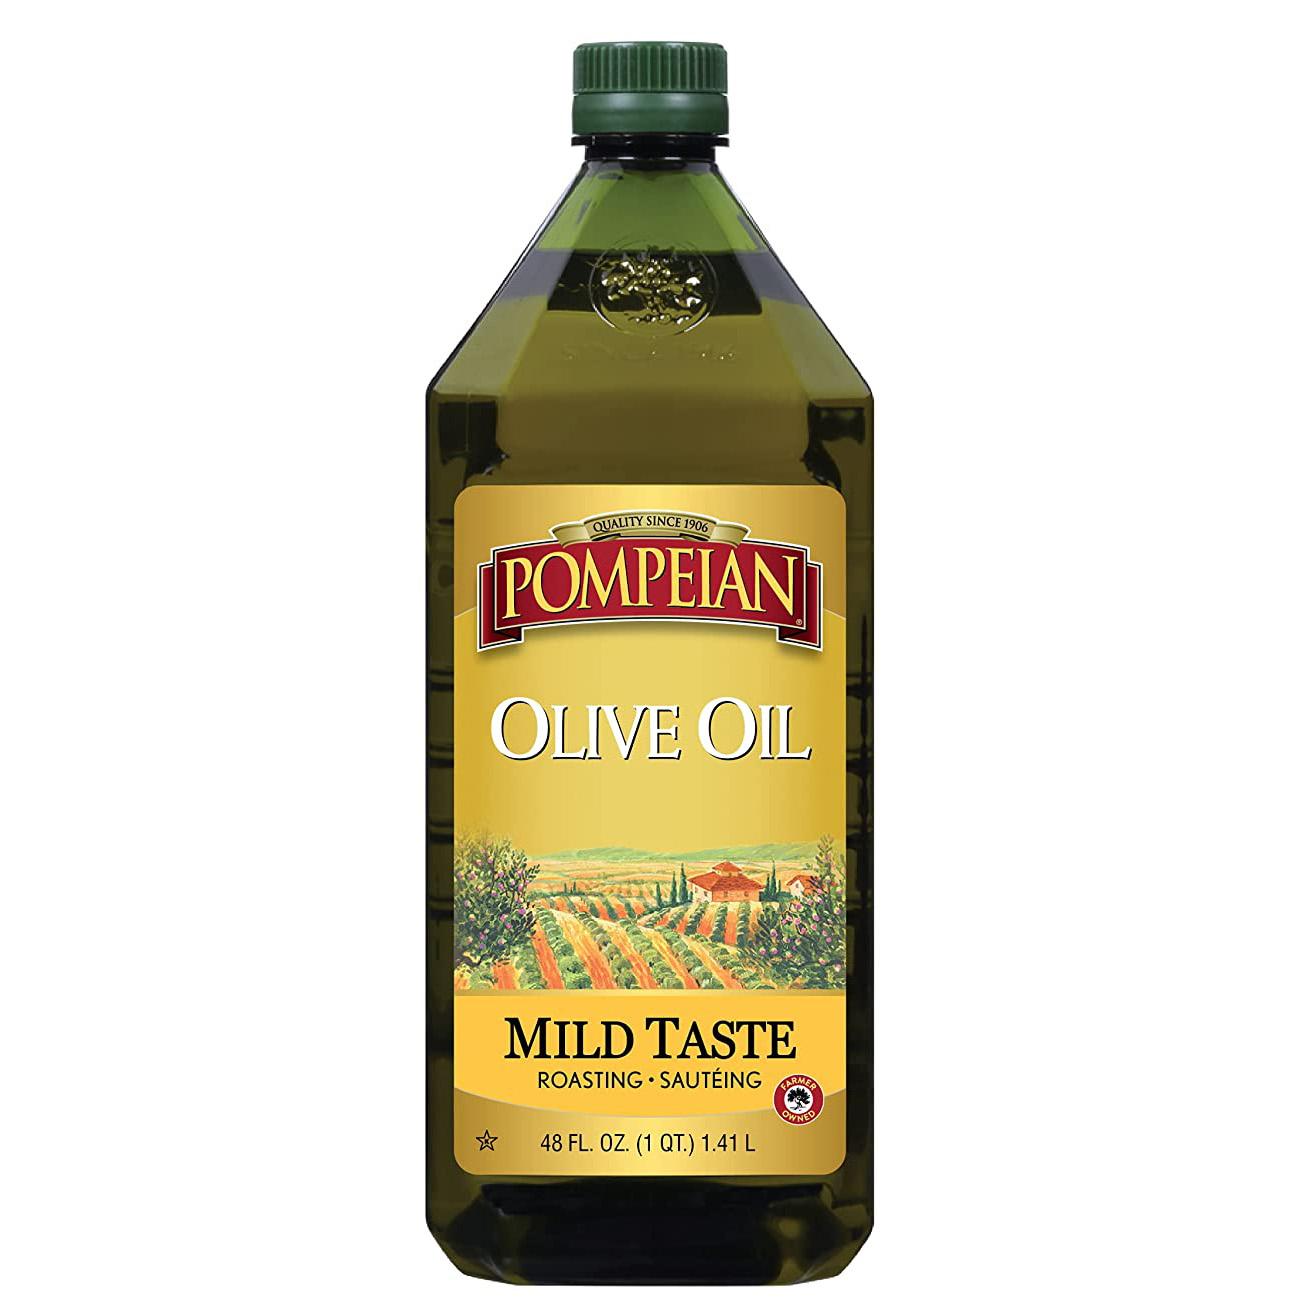 68oz Pompeian Mild Taste Olive Oil for $8.53 Shipped